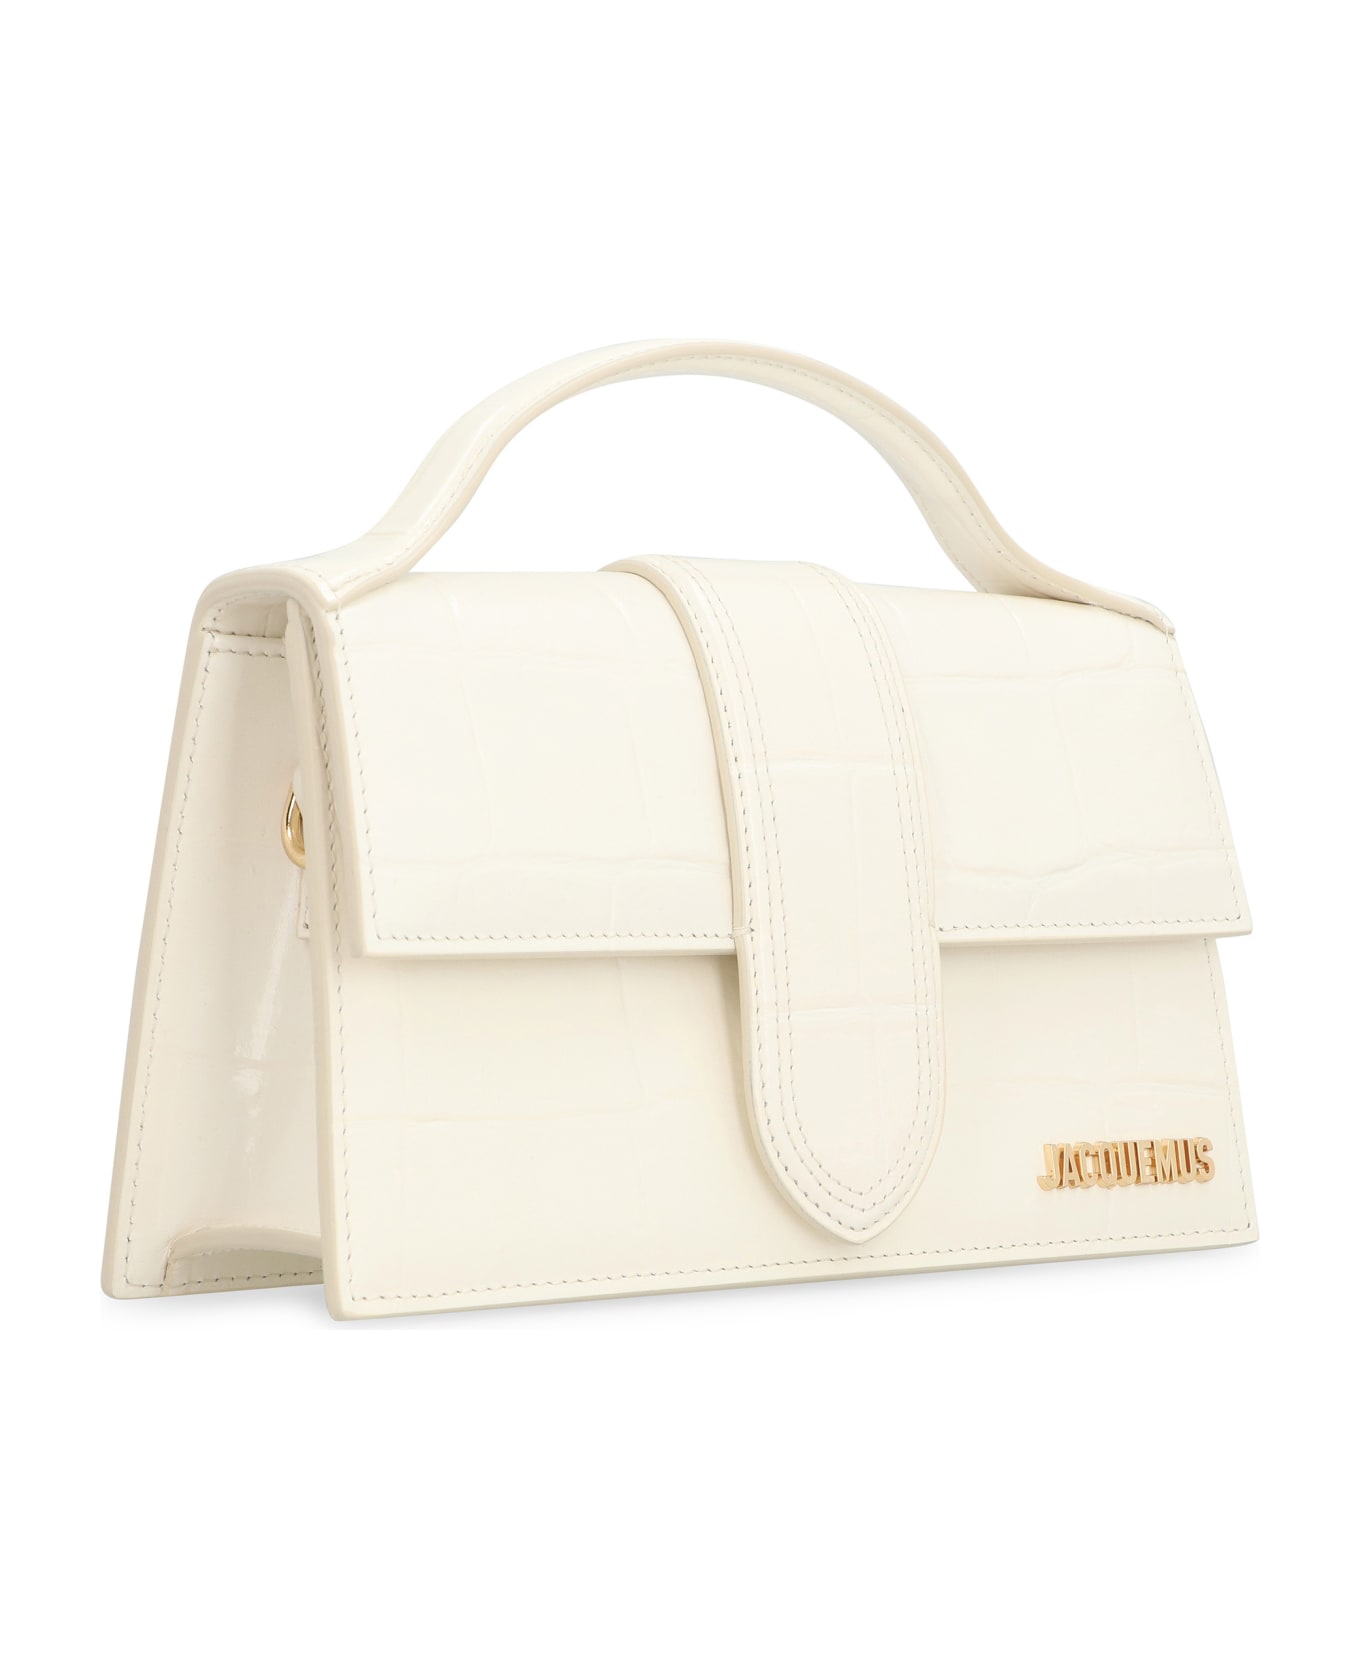 Jacquemus Le Grand Bambino Leather Handbag - White